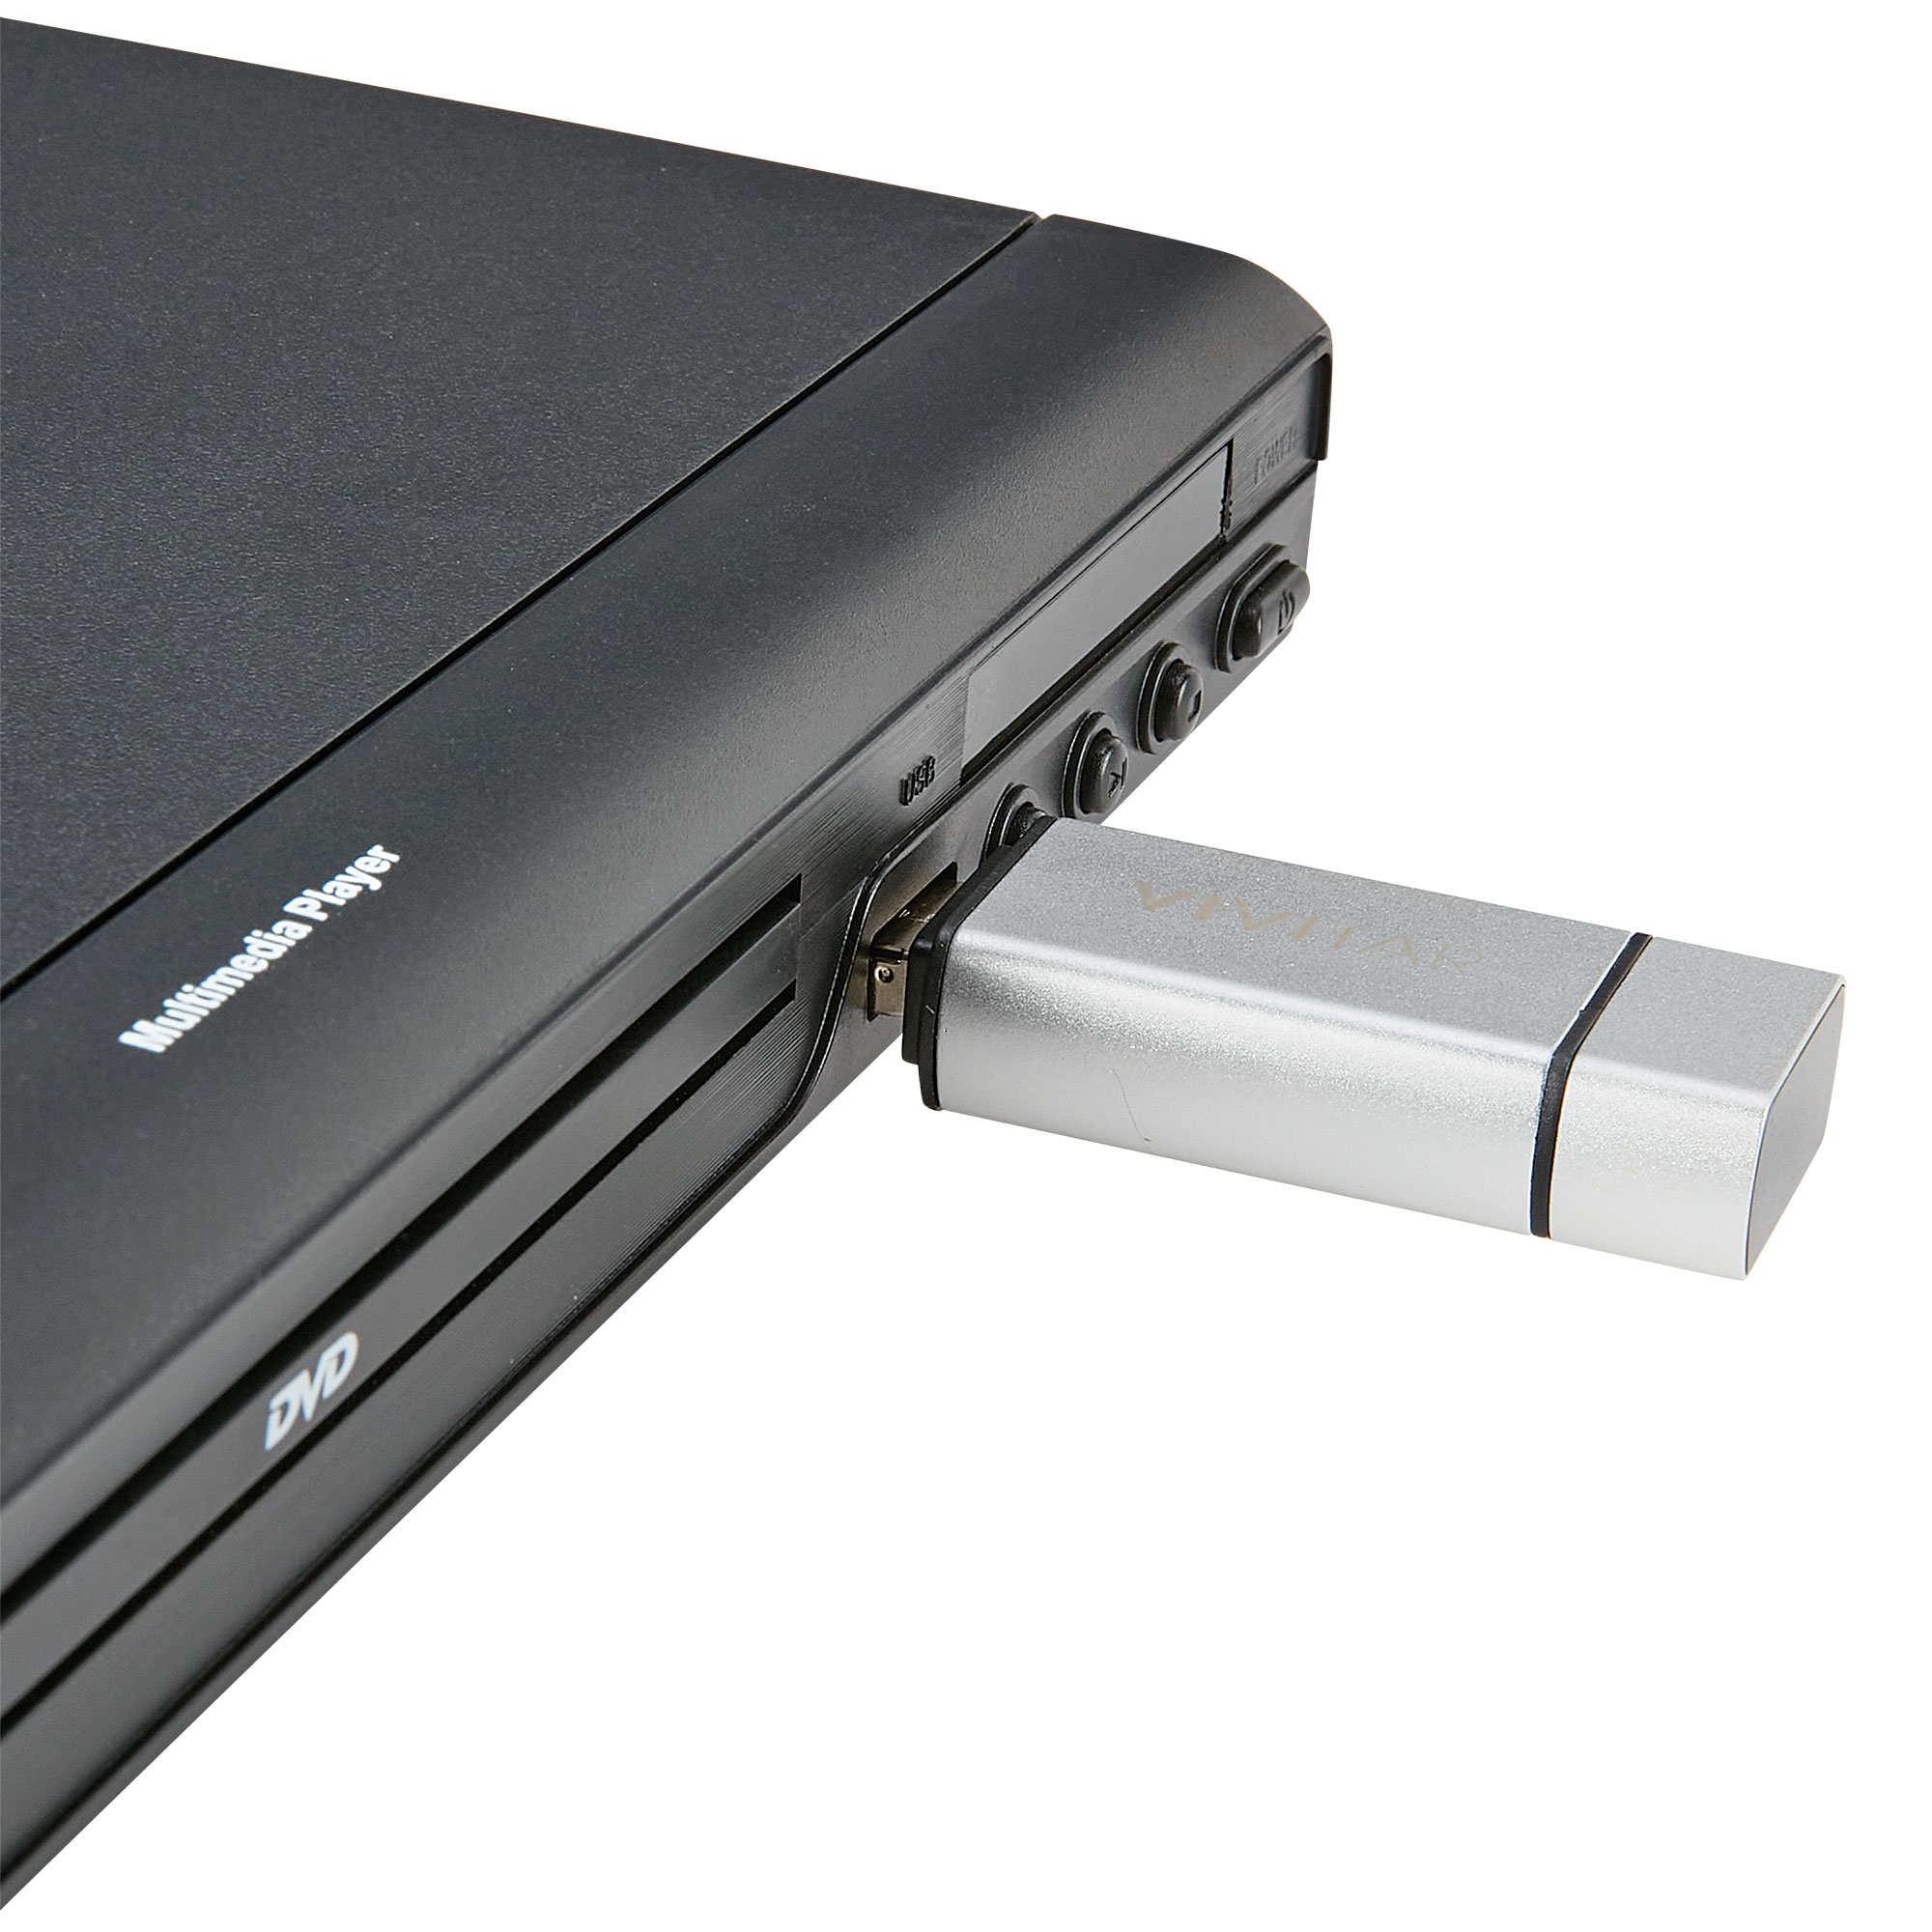 Audiobox Portable 1080p DVD Player - image 2 of 5